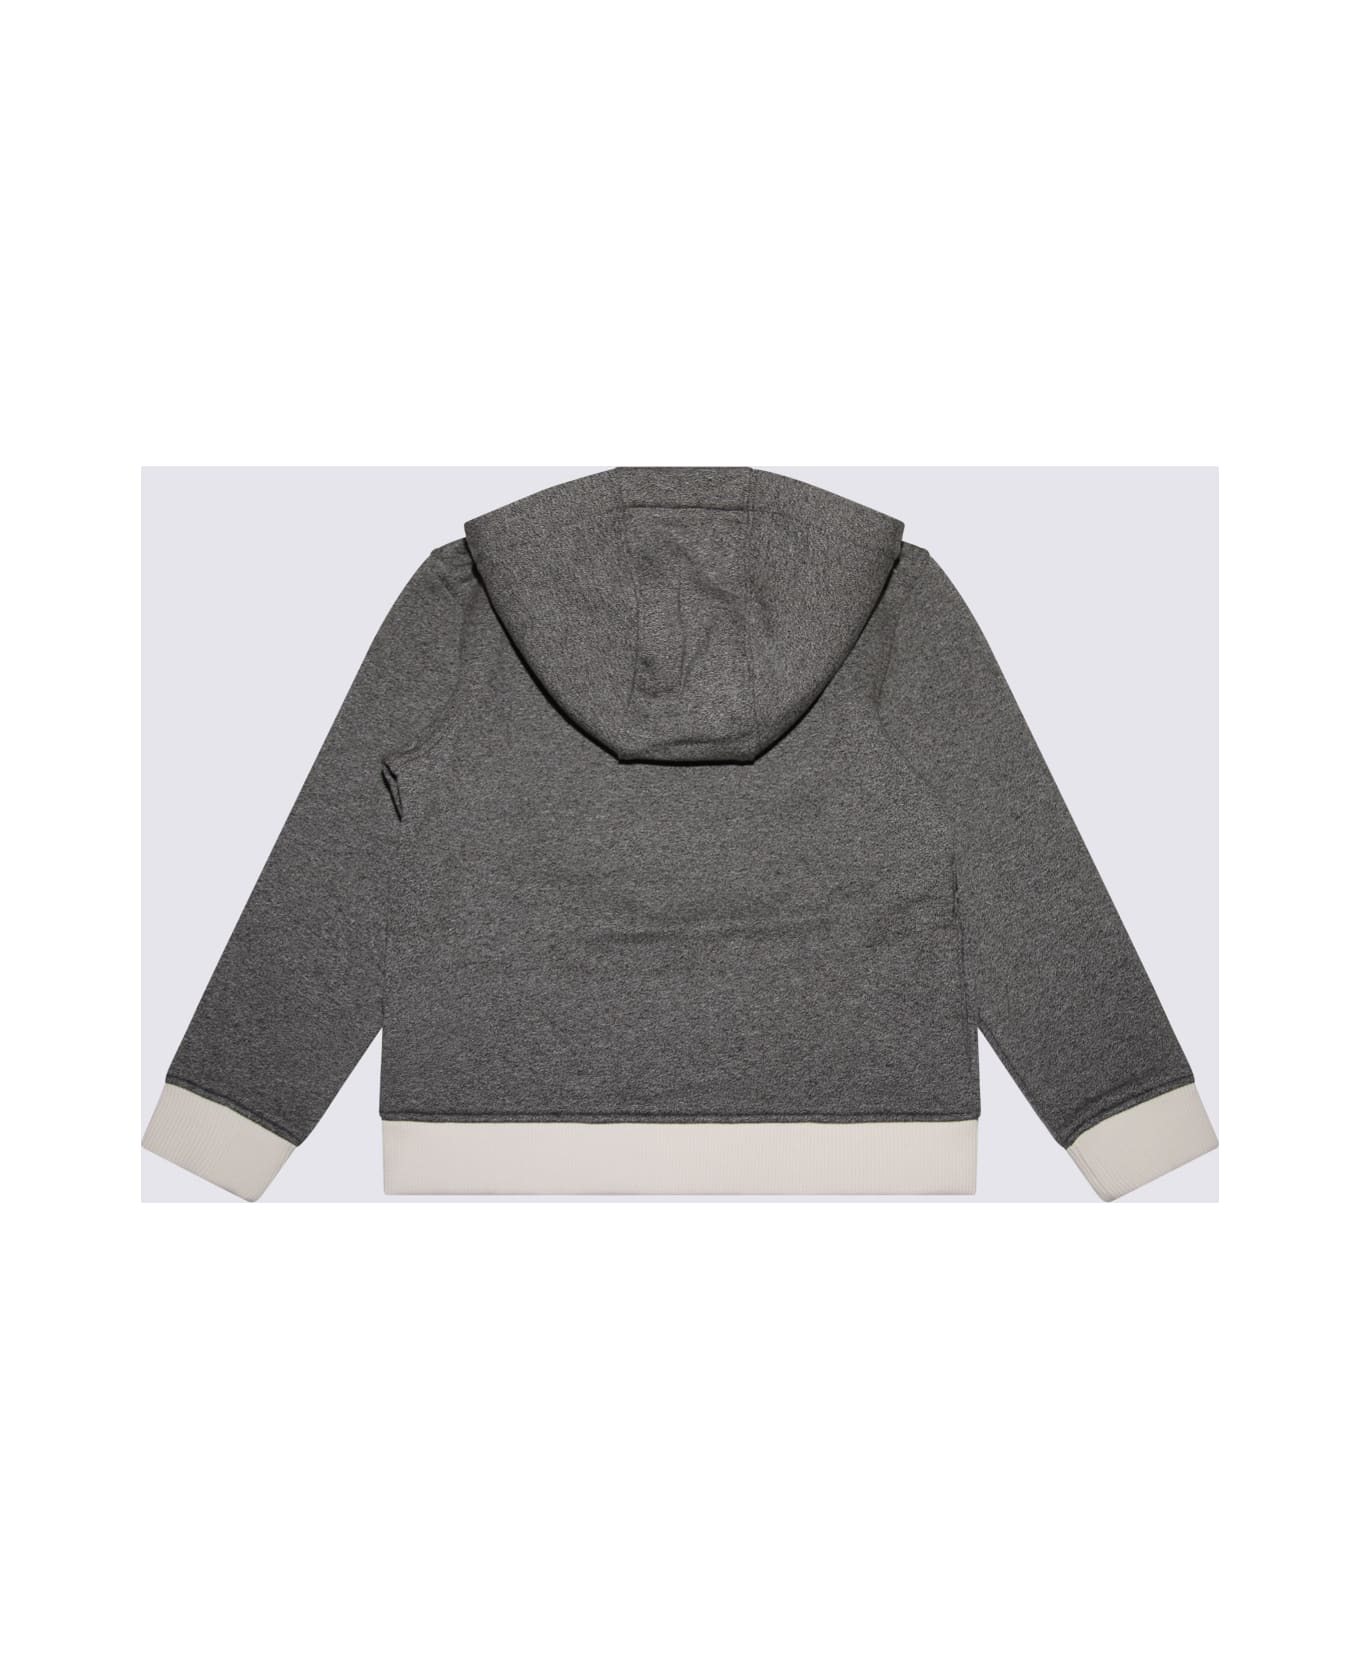 Burberry Grey And White Cotton Sweatshirt - Charcoal Grey Melange